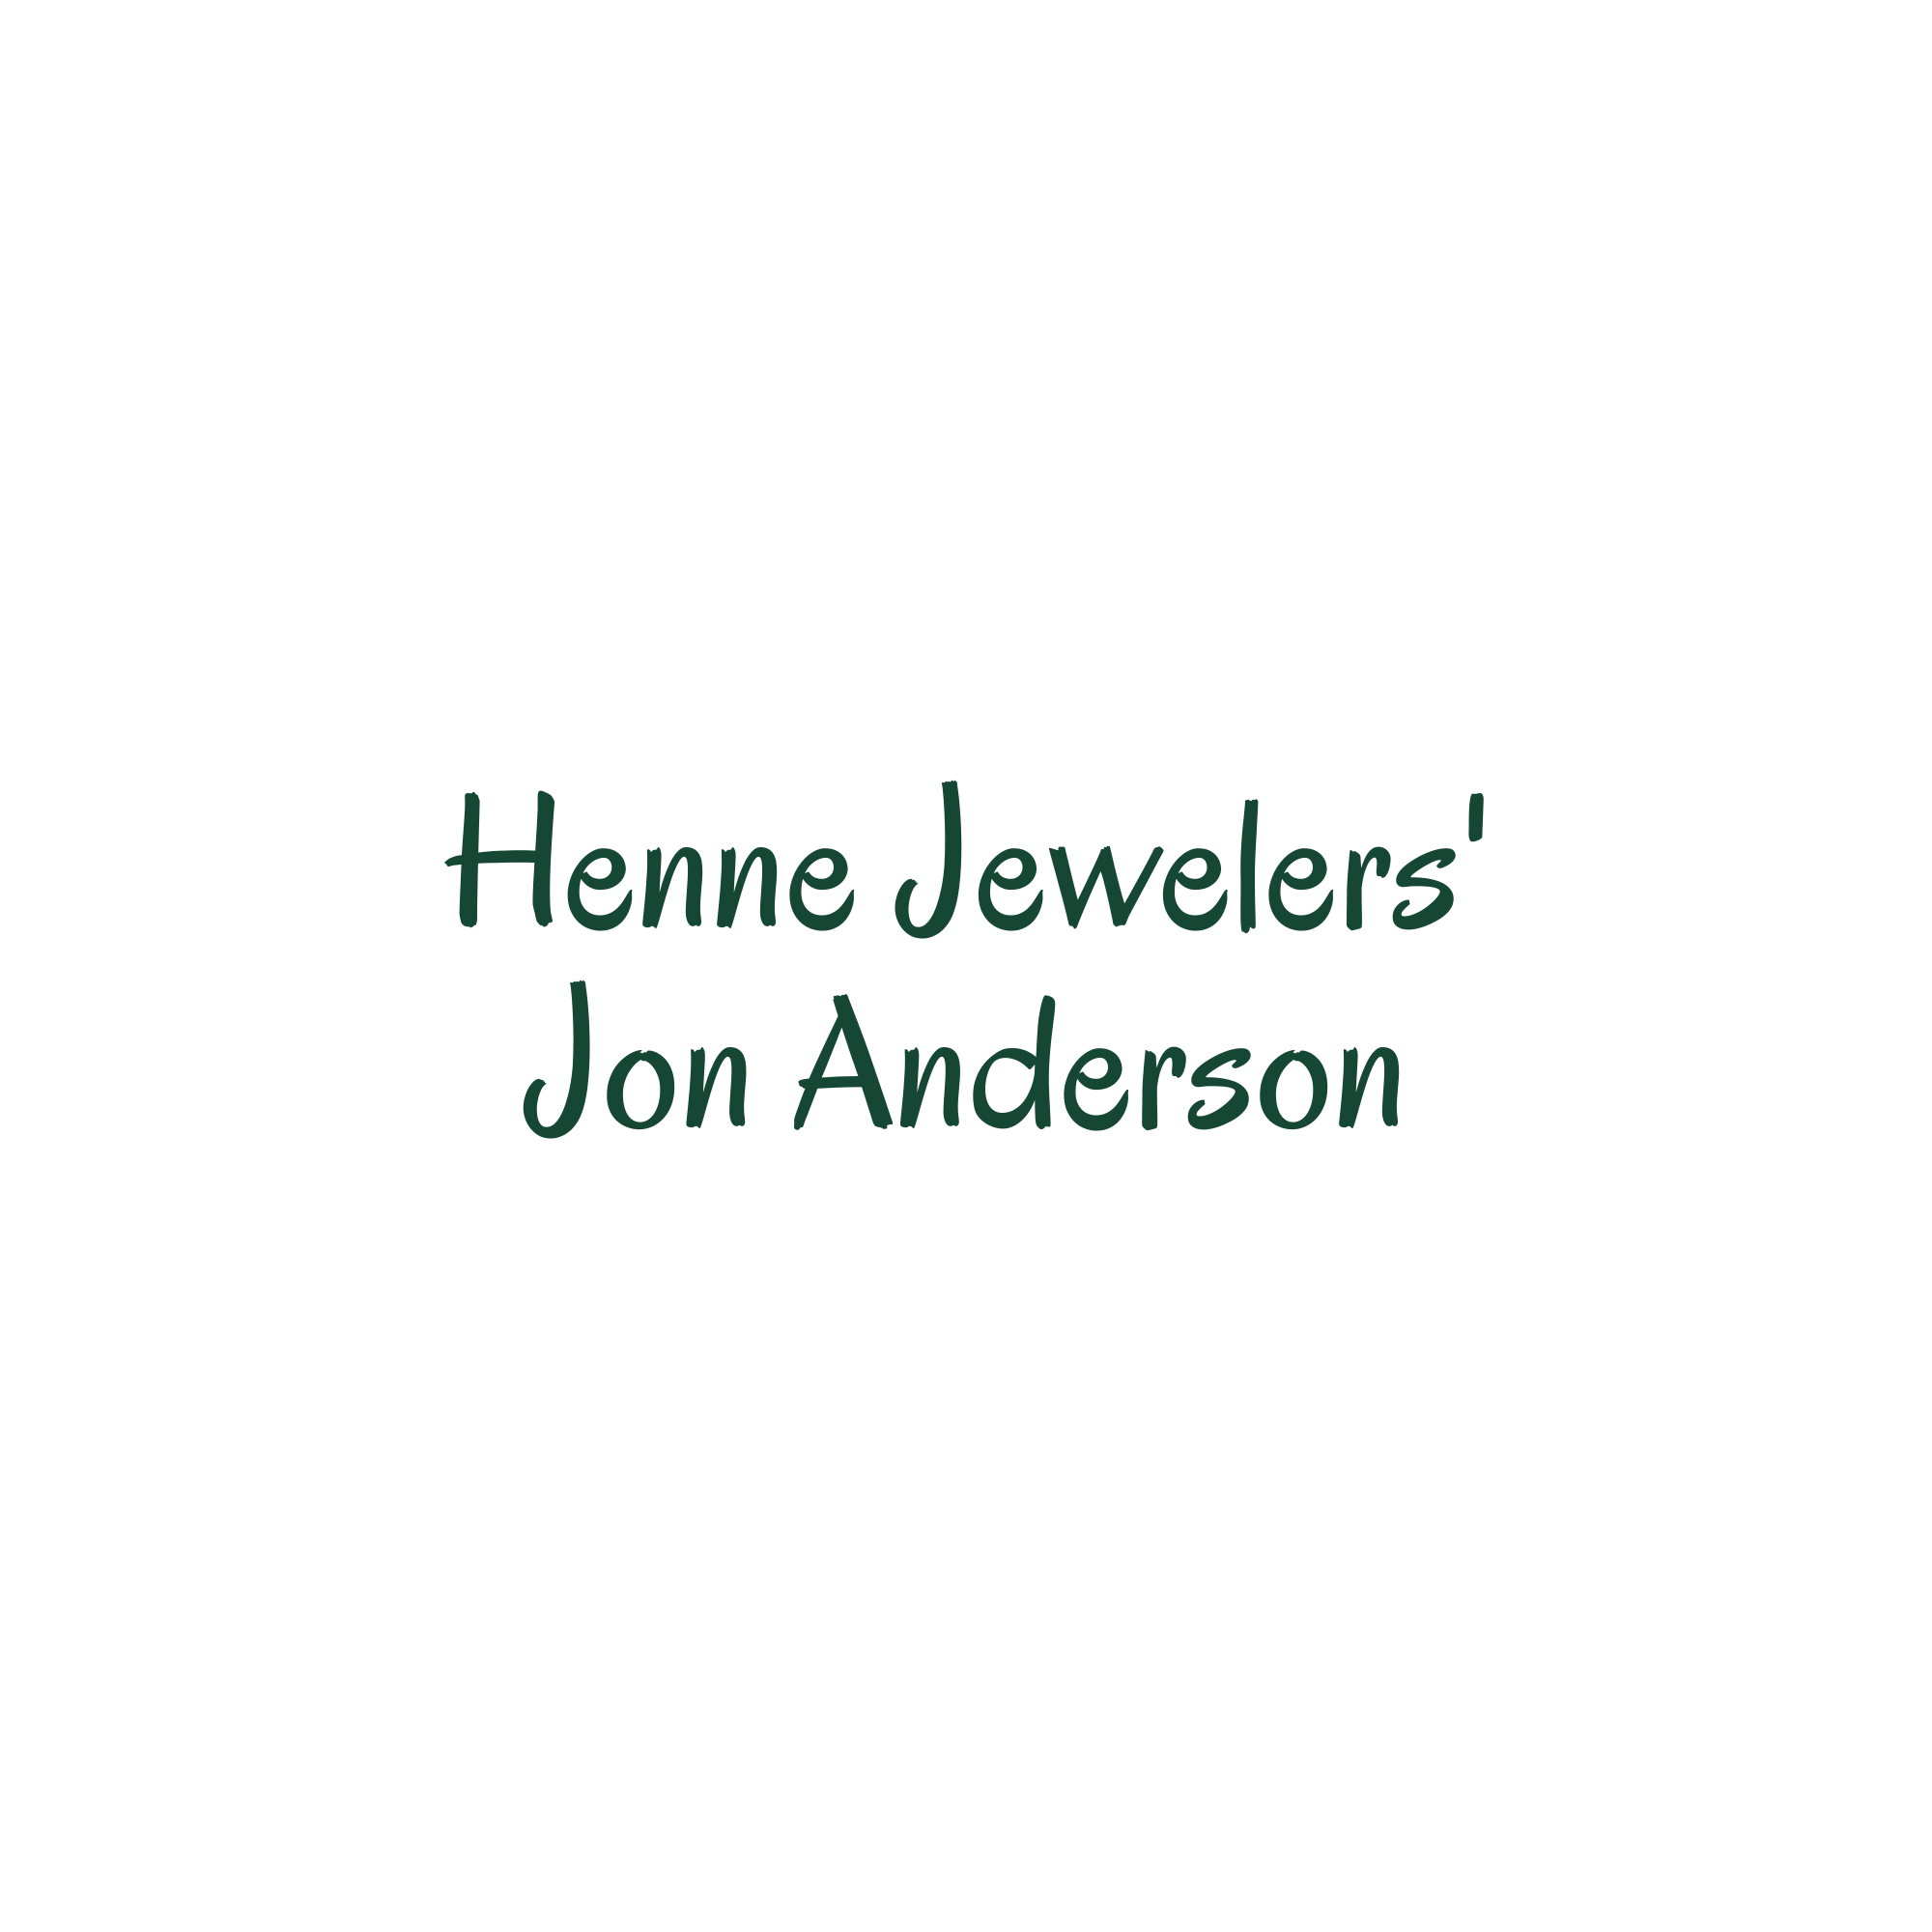 Henne Jewelers' Jon Anderson